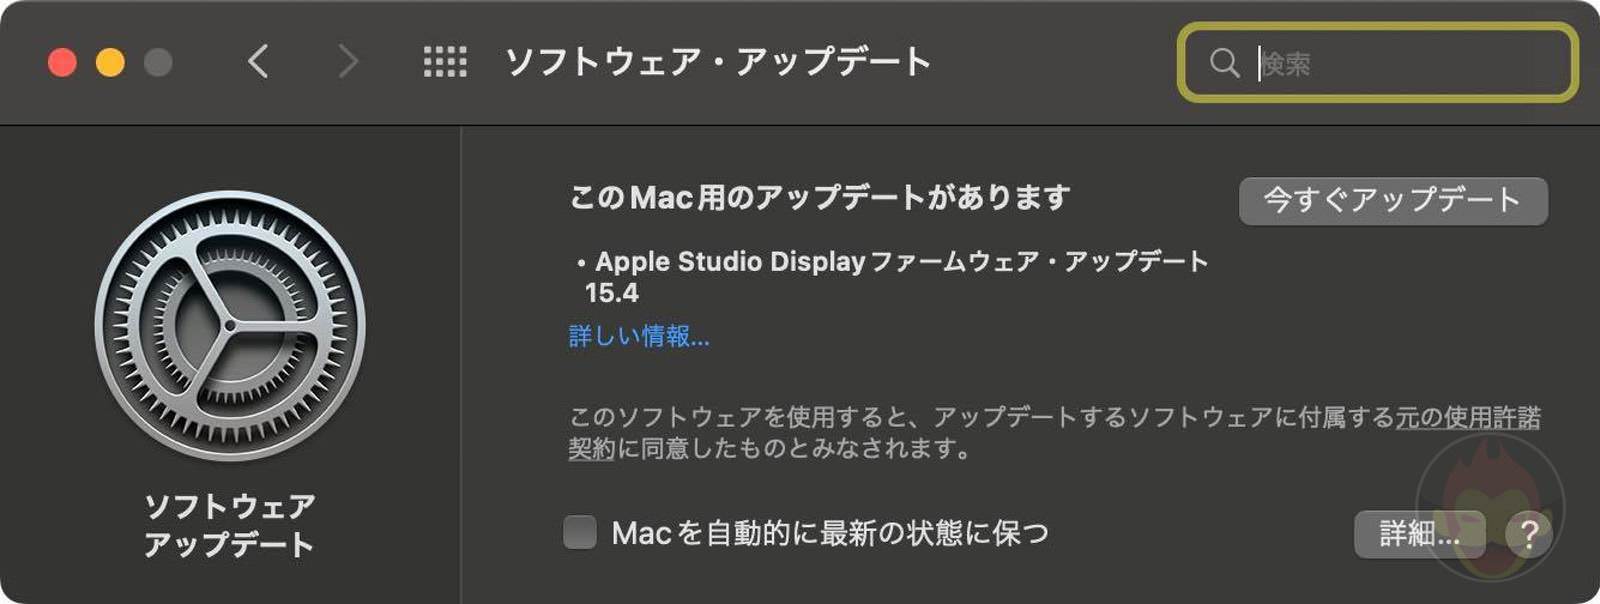 Updating Studio Display 01